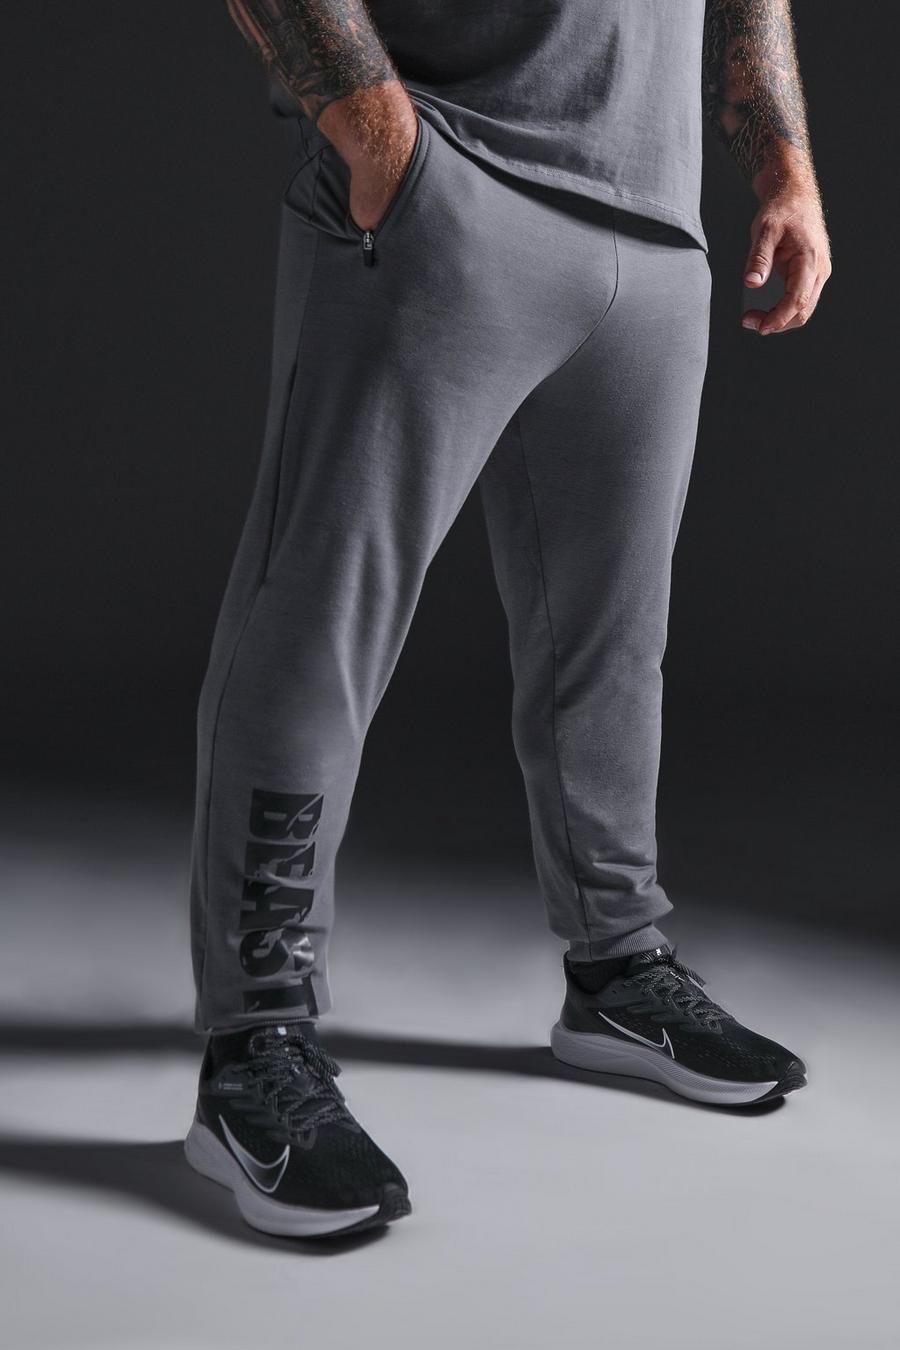 Pantalón deportivo MAN Active x Beast para el gimnasio, Charcoal grigio image number 1